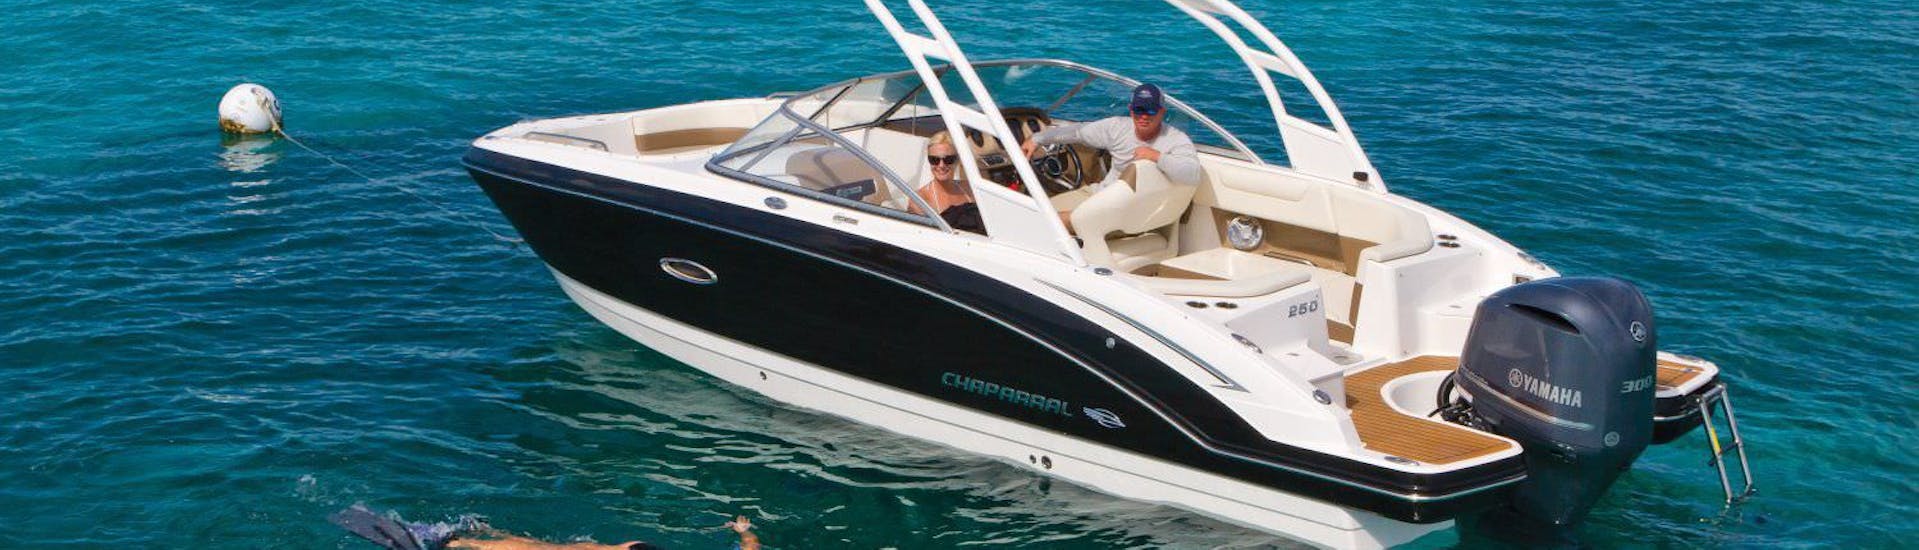 Es Vedra Charter Ibiza luxury boat rental for up to 12 people navigating around San Antonio.